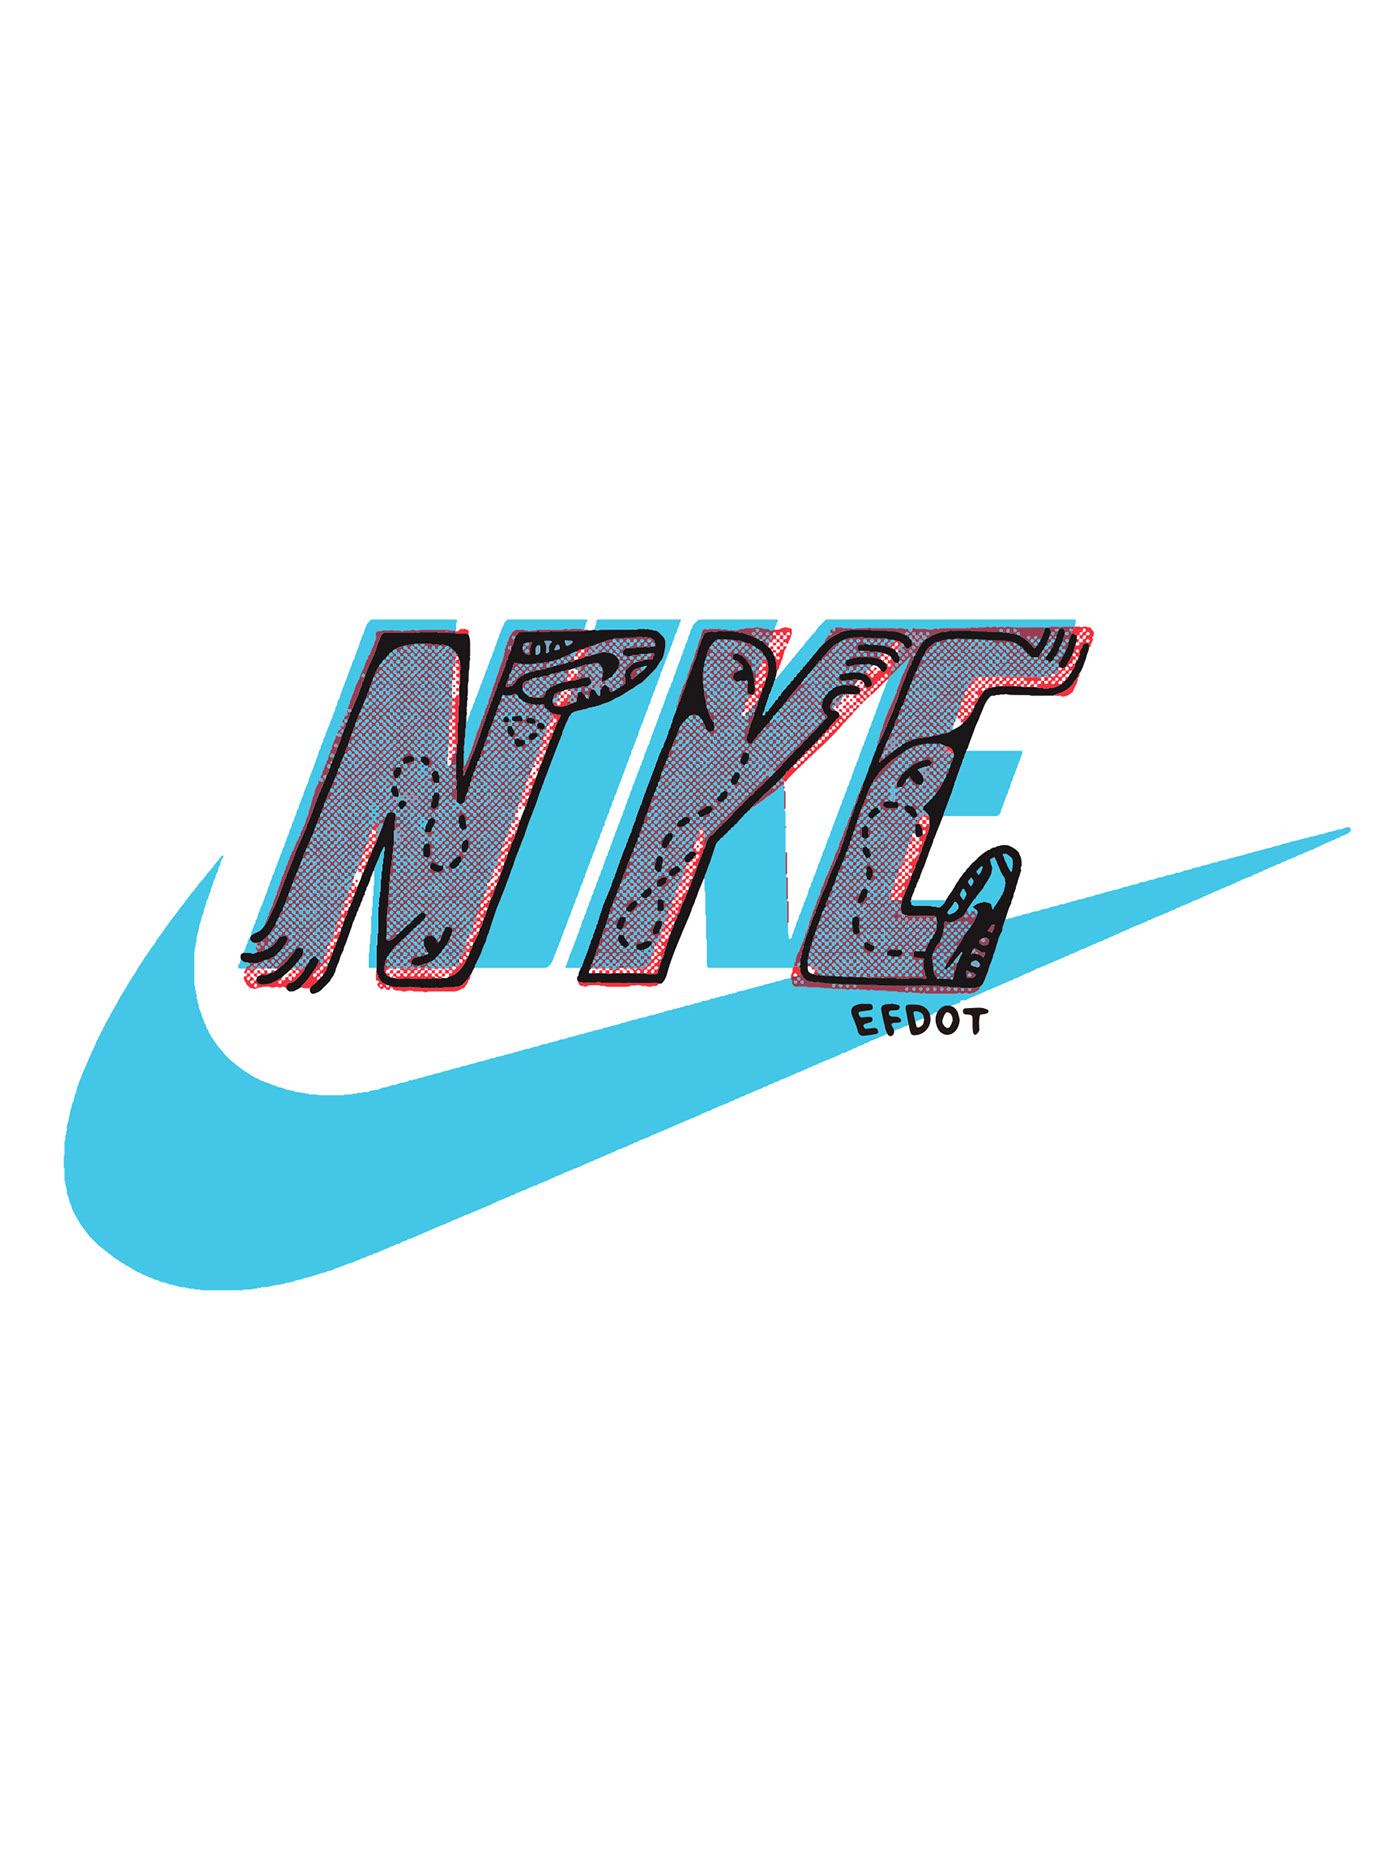 Nike Beach Logo Wallpapers